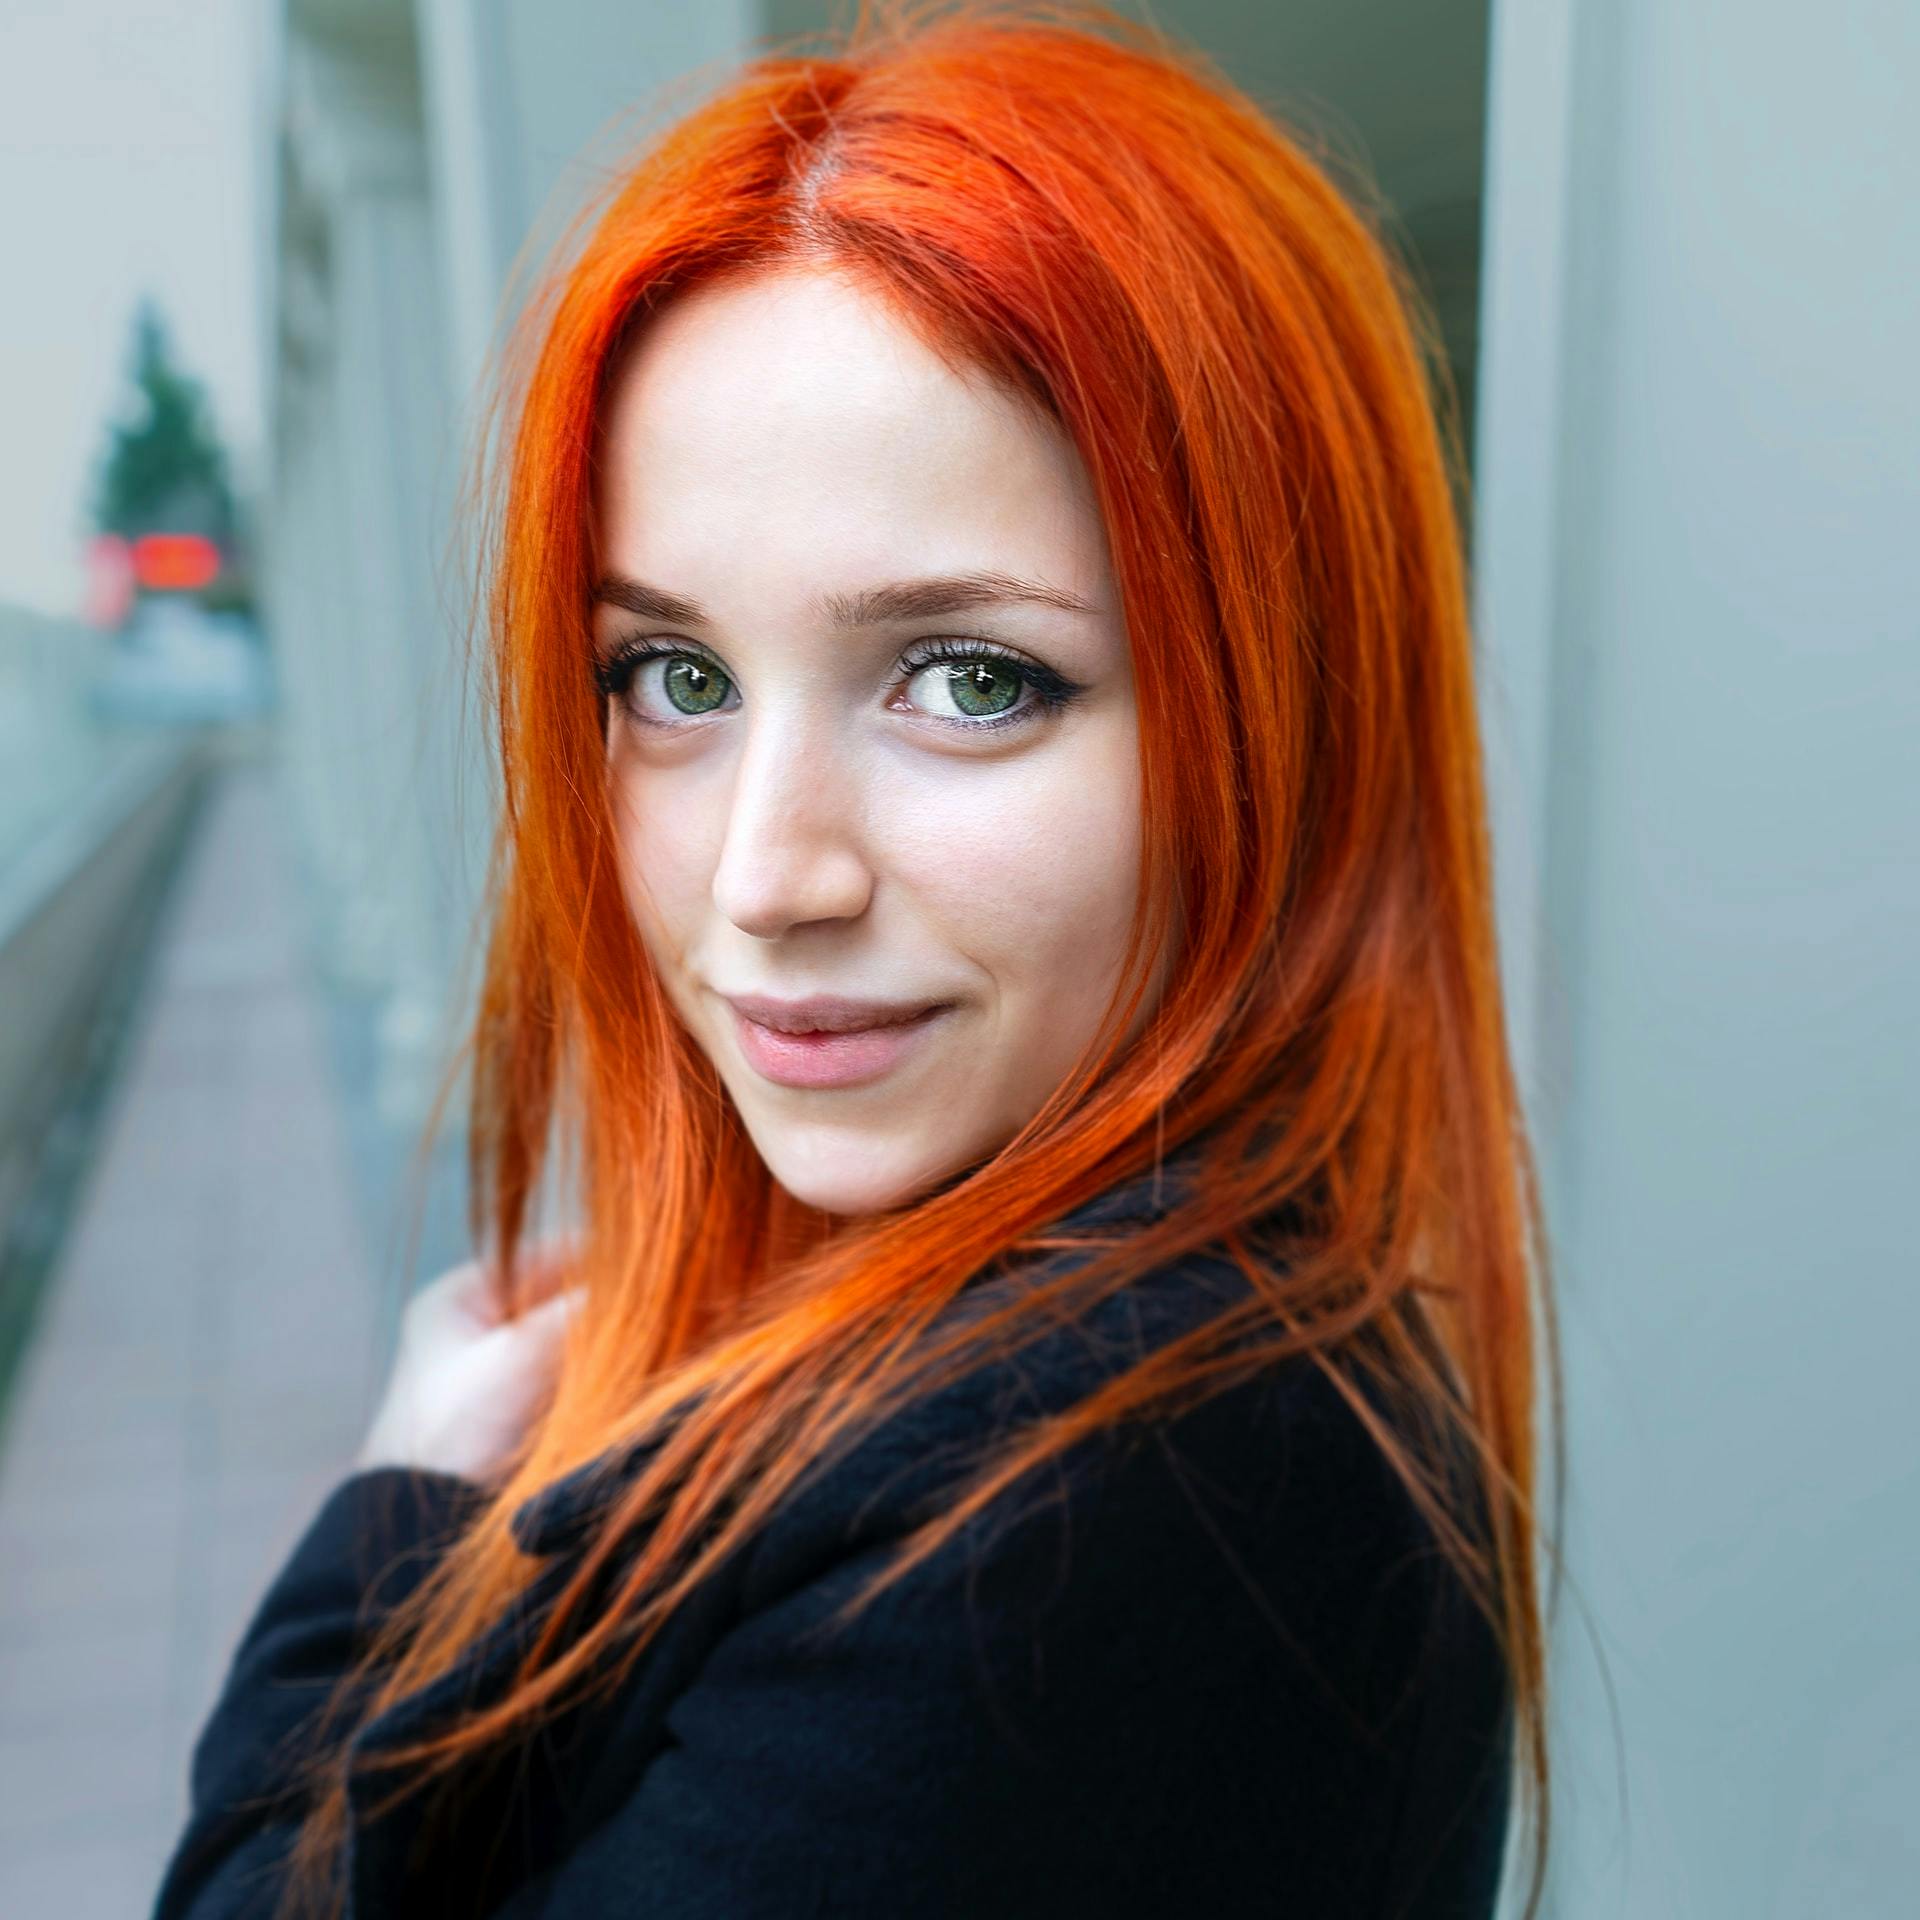 Woman with orange hair looking at camera.